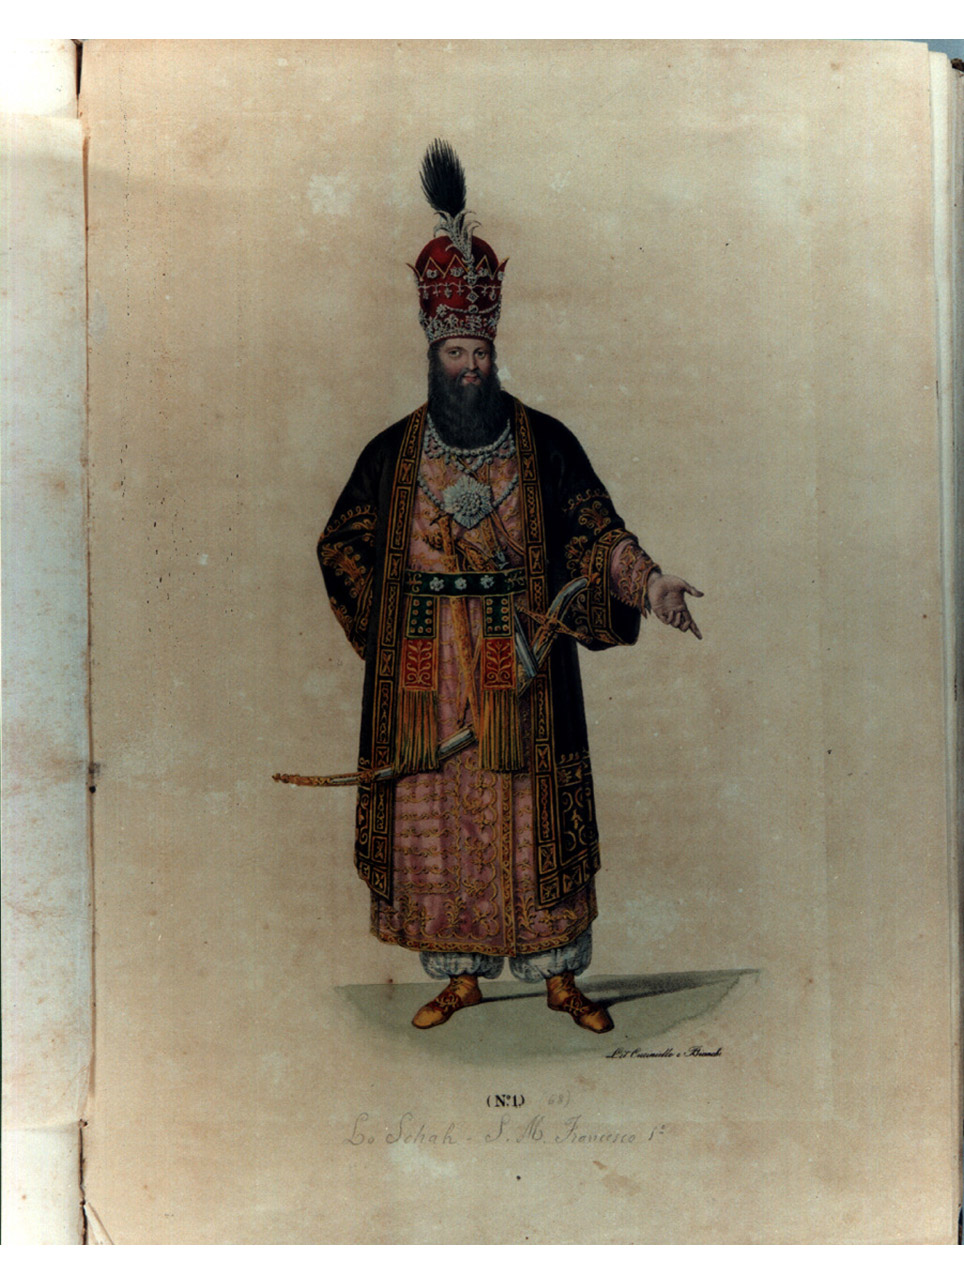 figura maschile in costume da Shah (stampa a colori, serie) di Bianchi Lorenzo, Morghen Luigi, Cuciniello Domenico (sec. XIX)